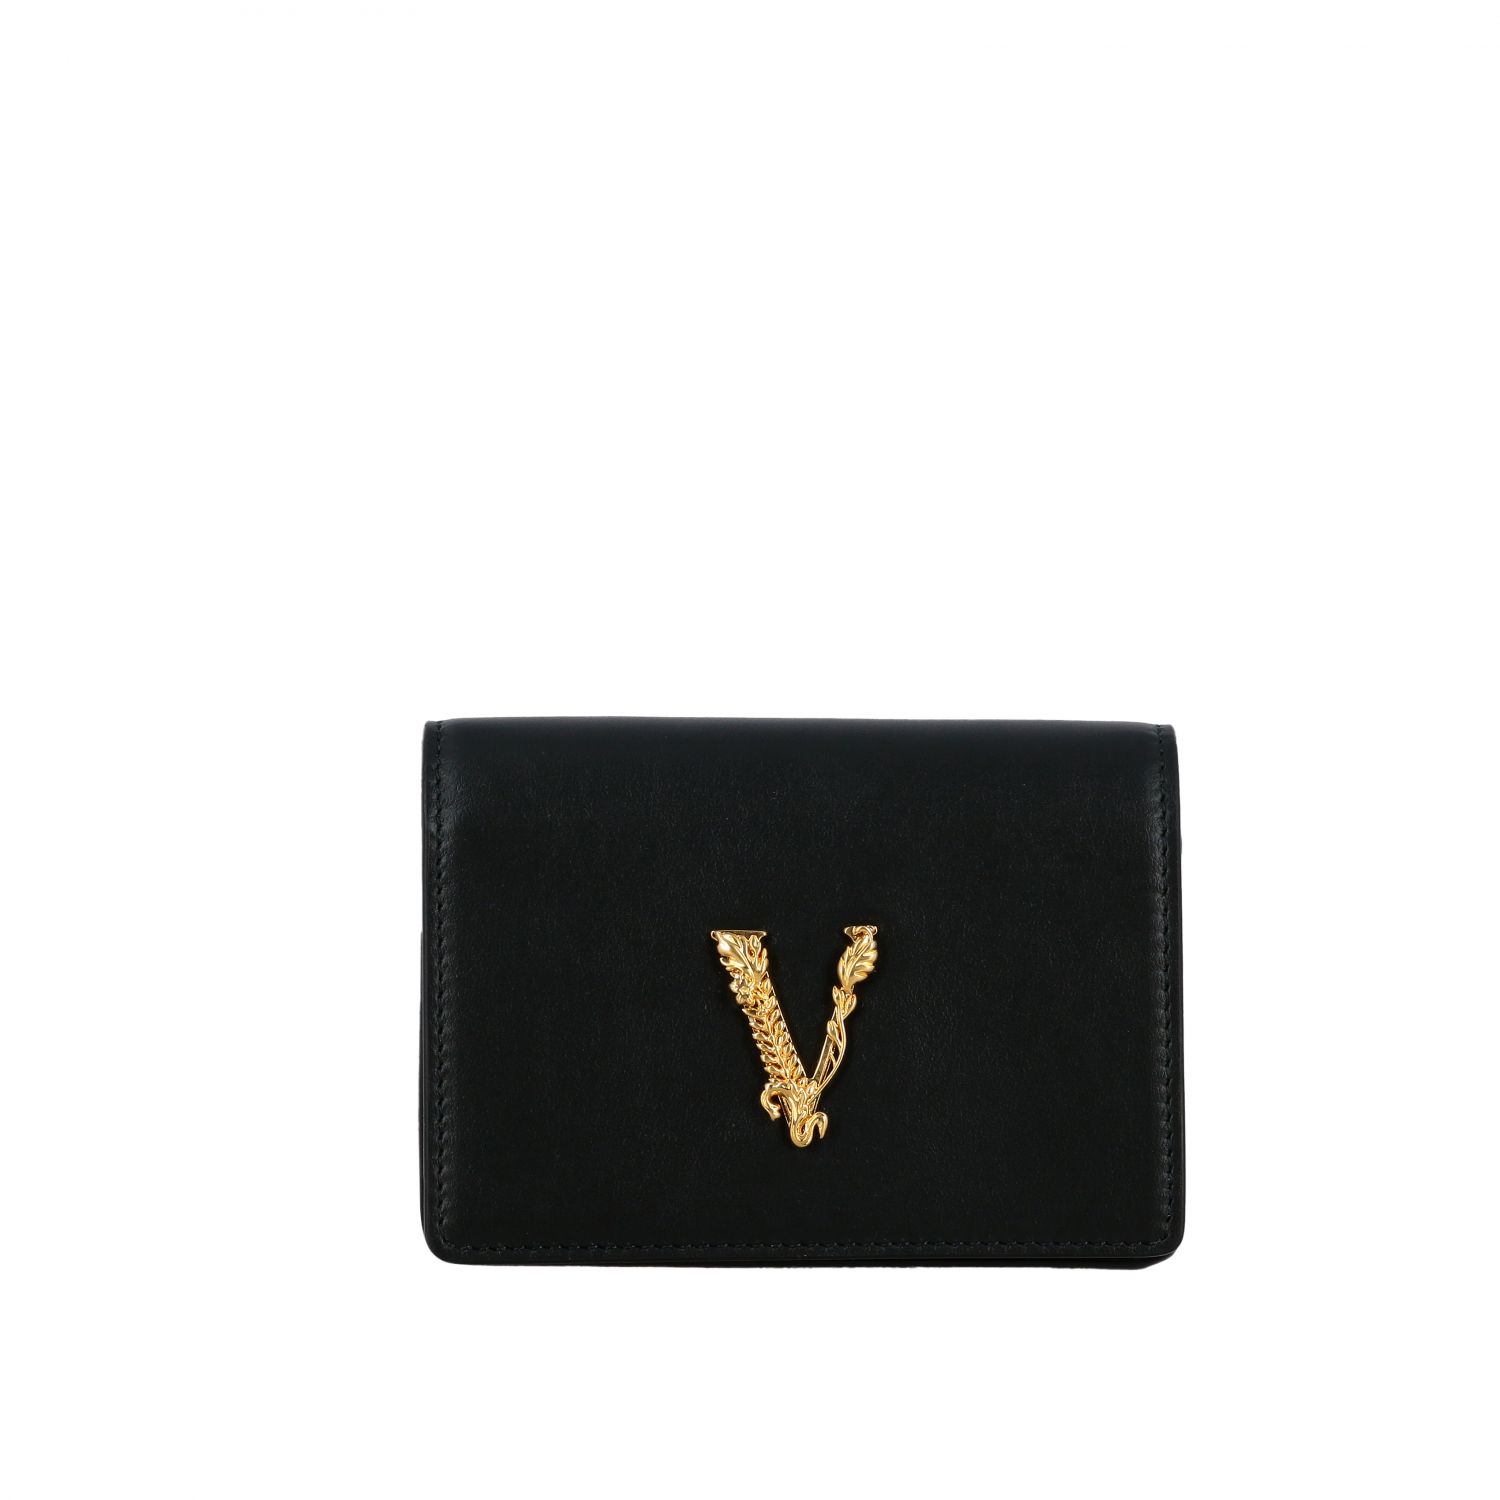 Versace Outlet: mini bag for women - Black | Versace mini bag DP3H538V ...